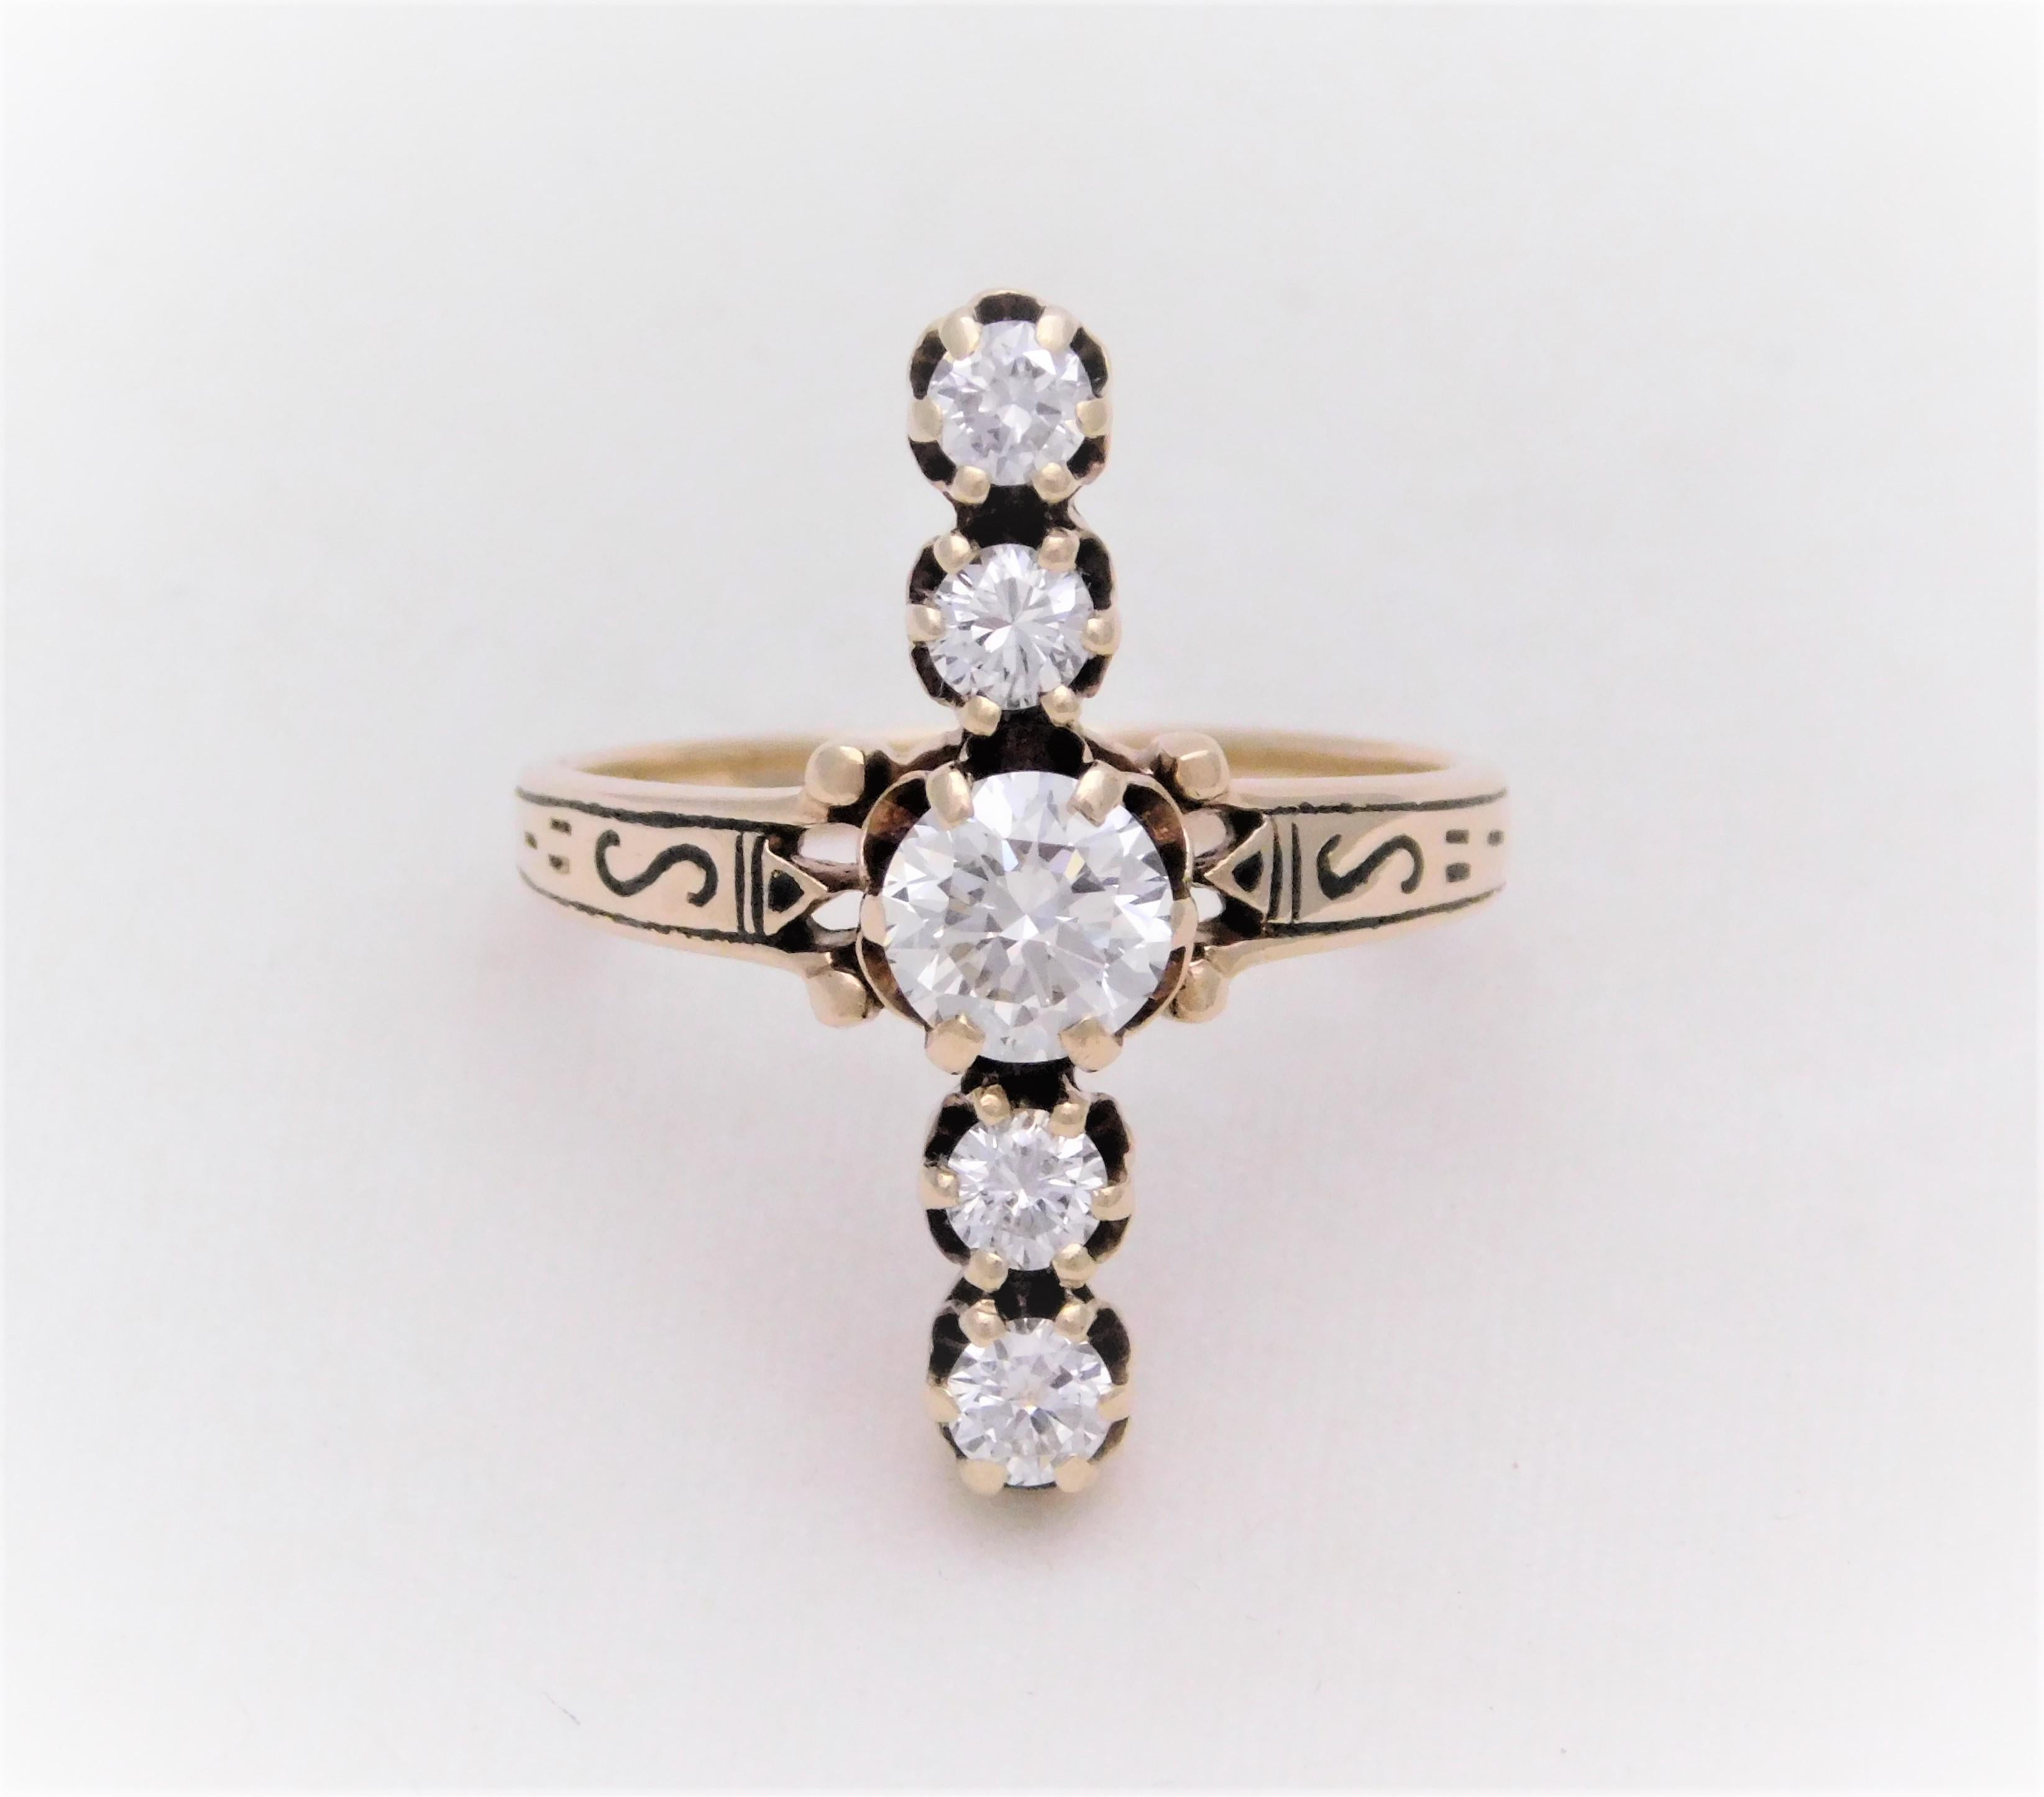 Modernist Unique Midcentury 1.22 Carat Diamond “Line” Cocktail Ring